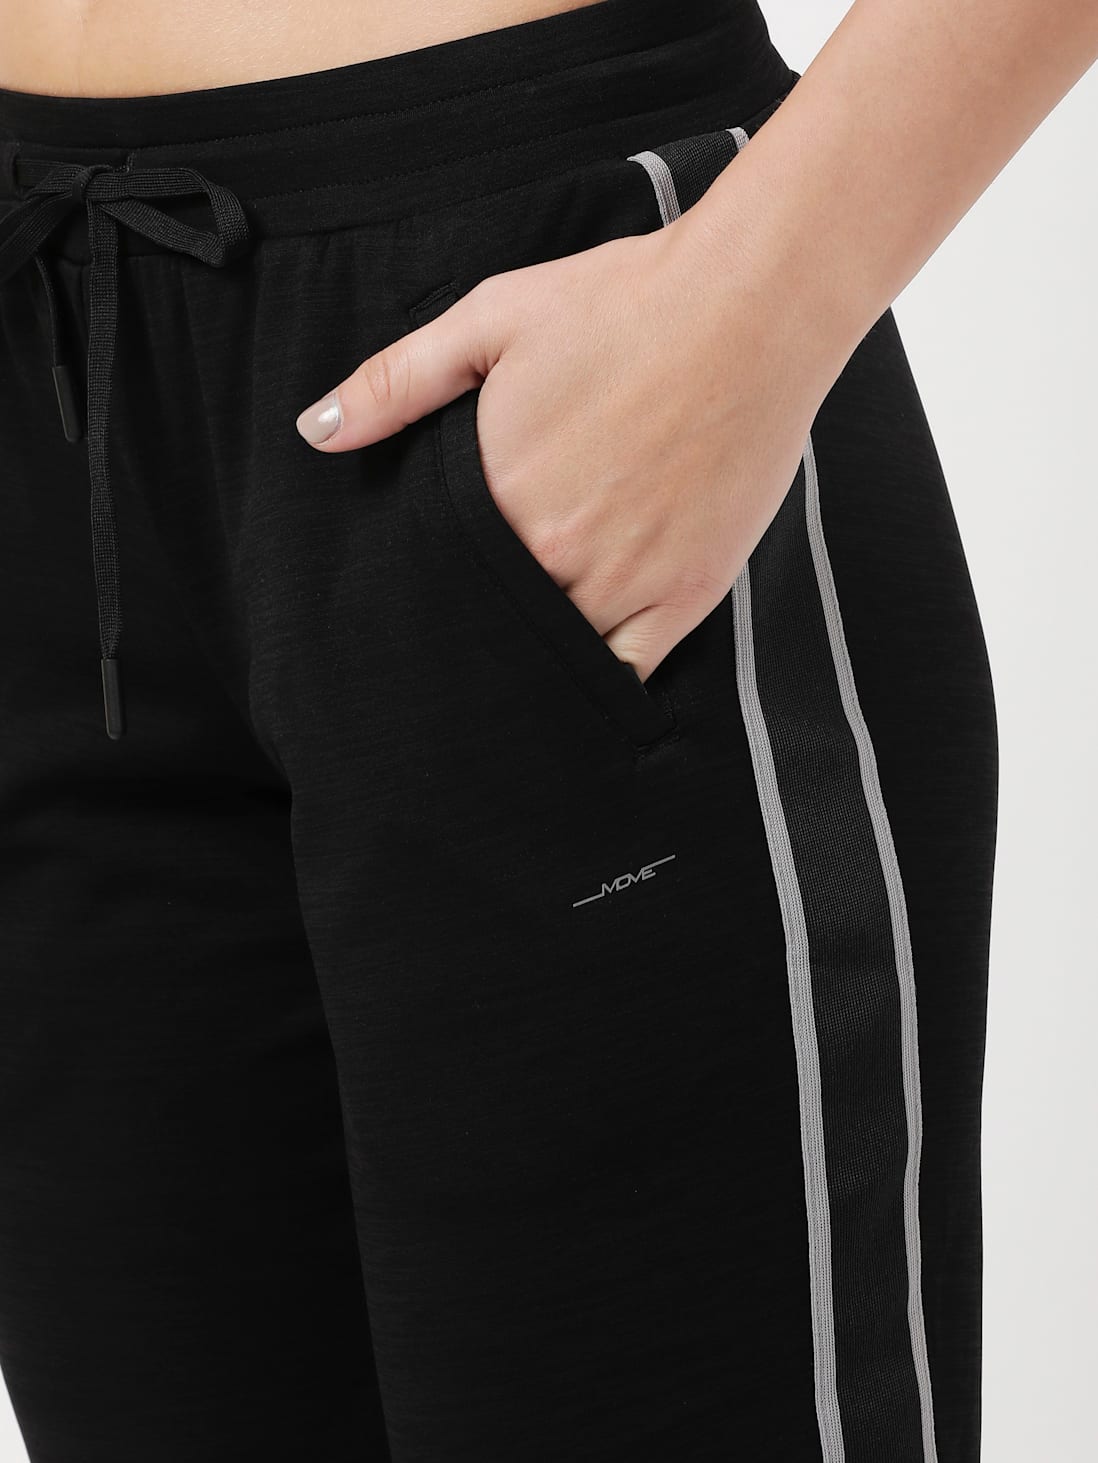 Jockey Polyester Athletic Pants for Women | Mercari